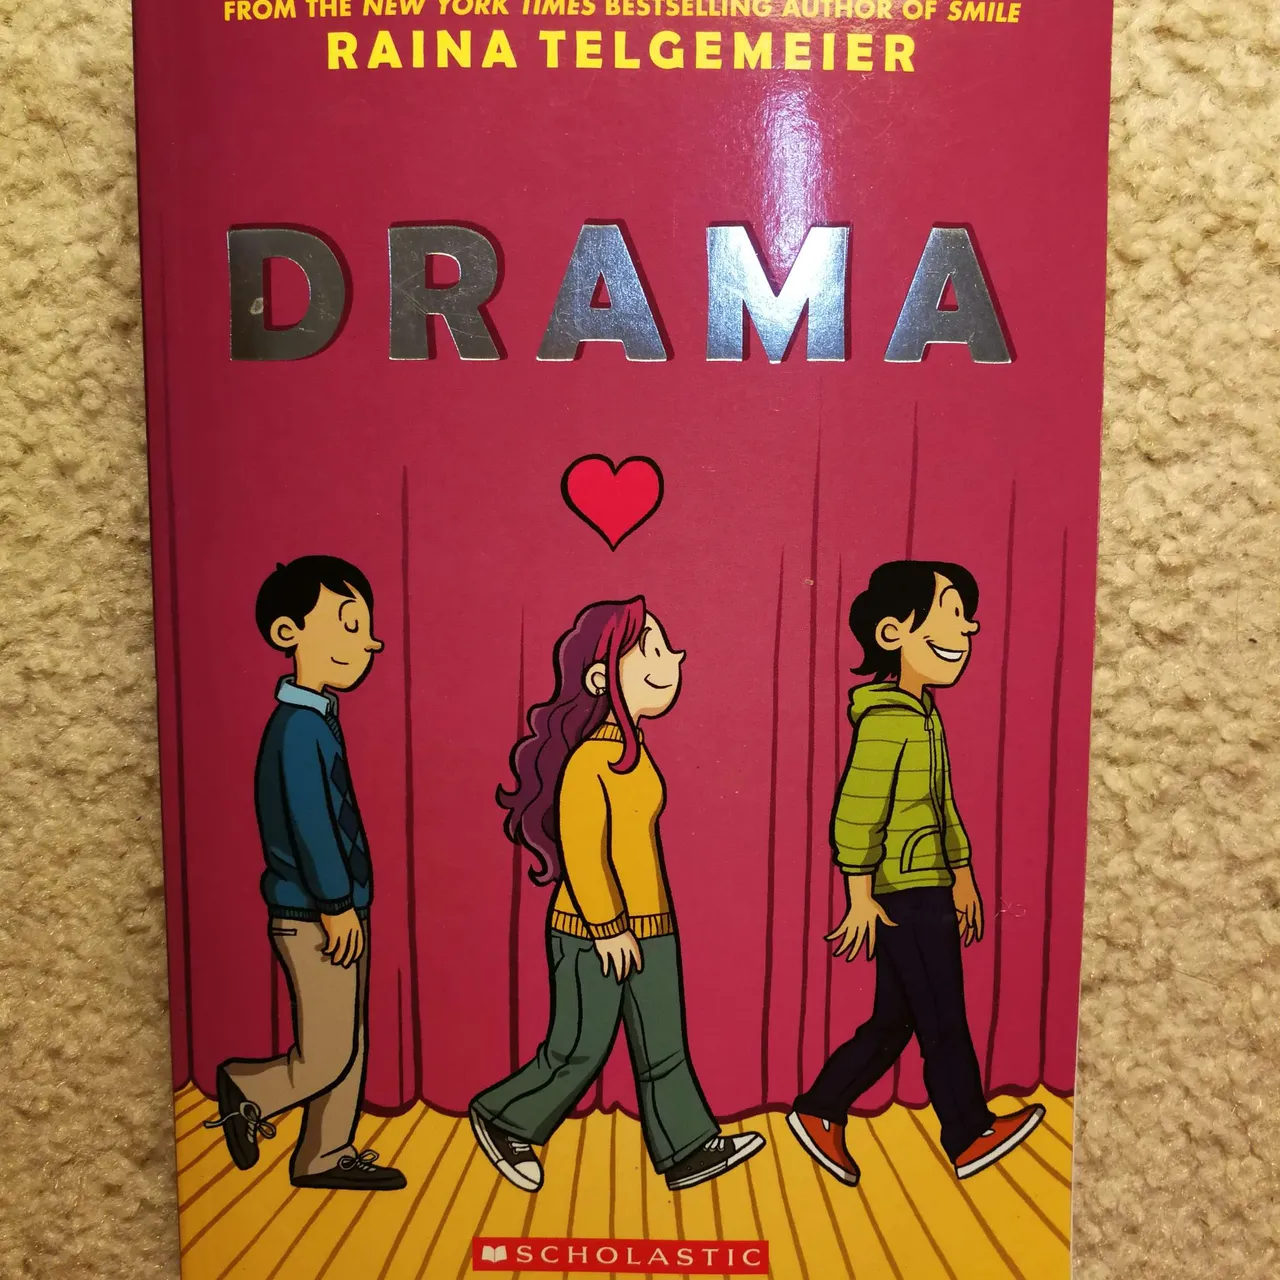 Drama, Comic book style, by Raina Telgemeier photo 1